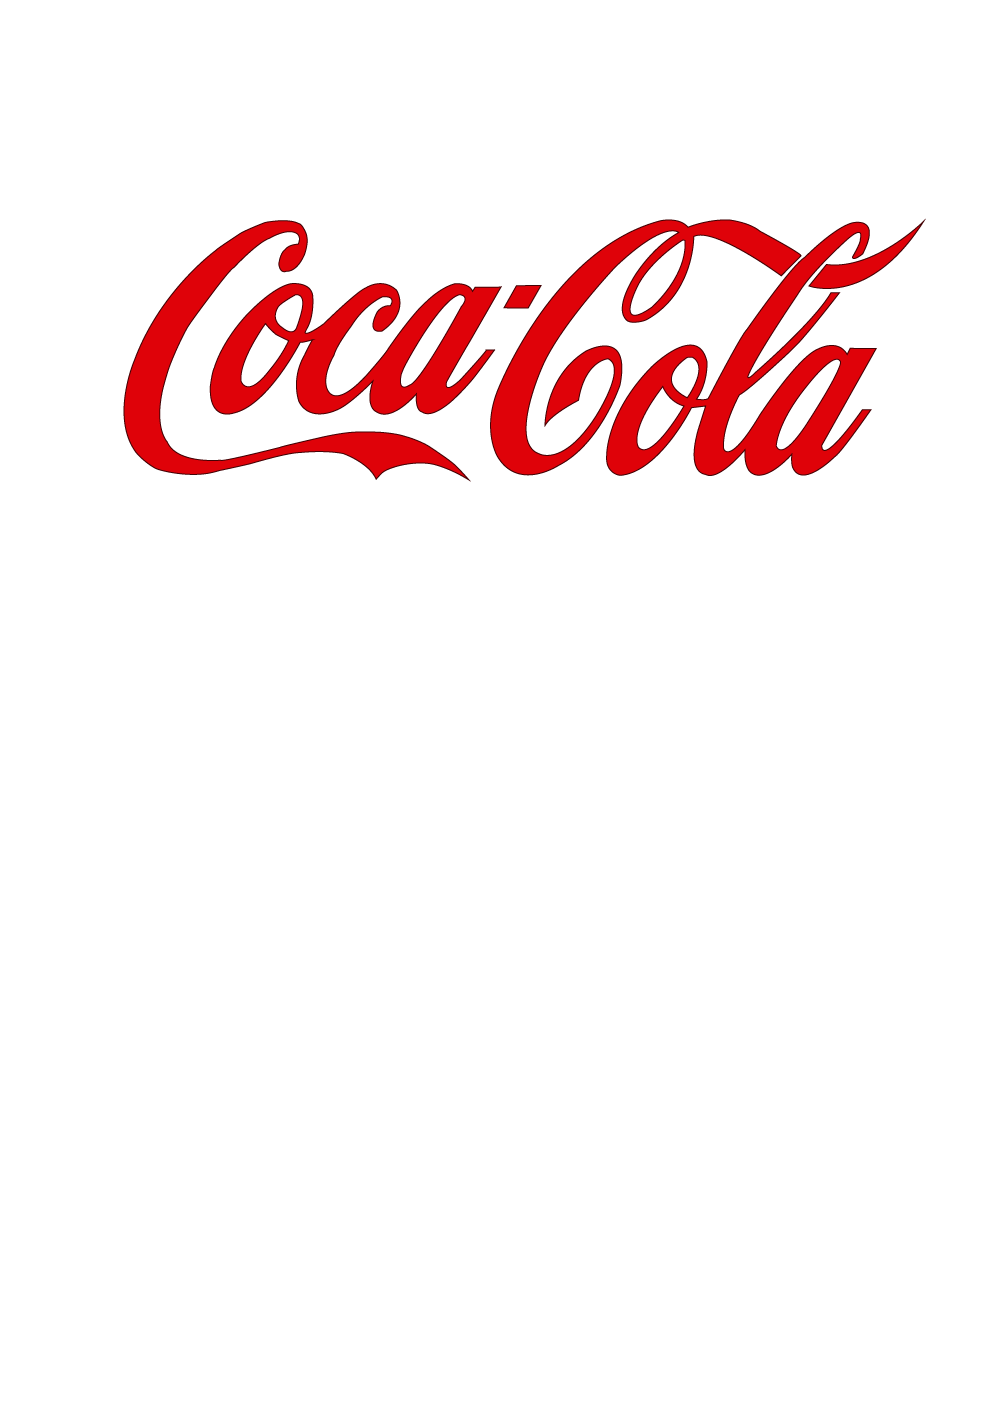 World of Coca-Cola Coca-Cola Cherry Logo - coca cola png download - 992 ...